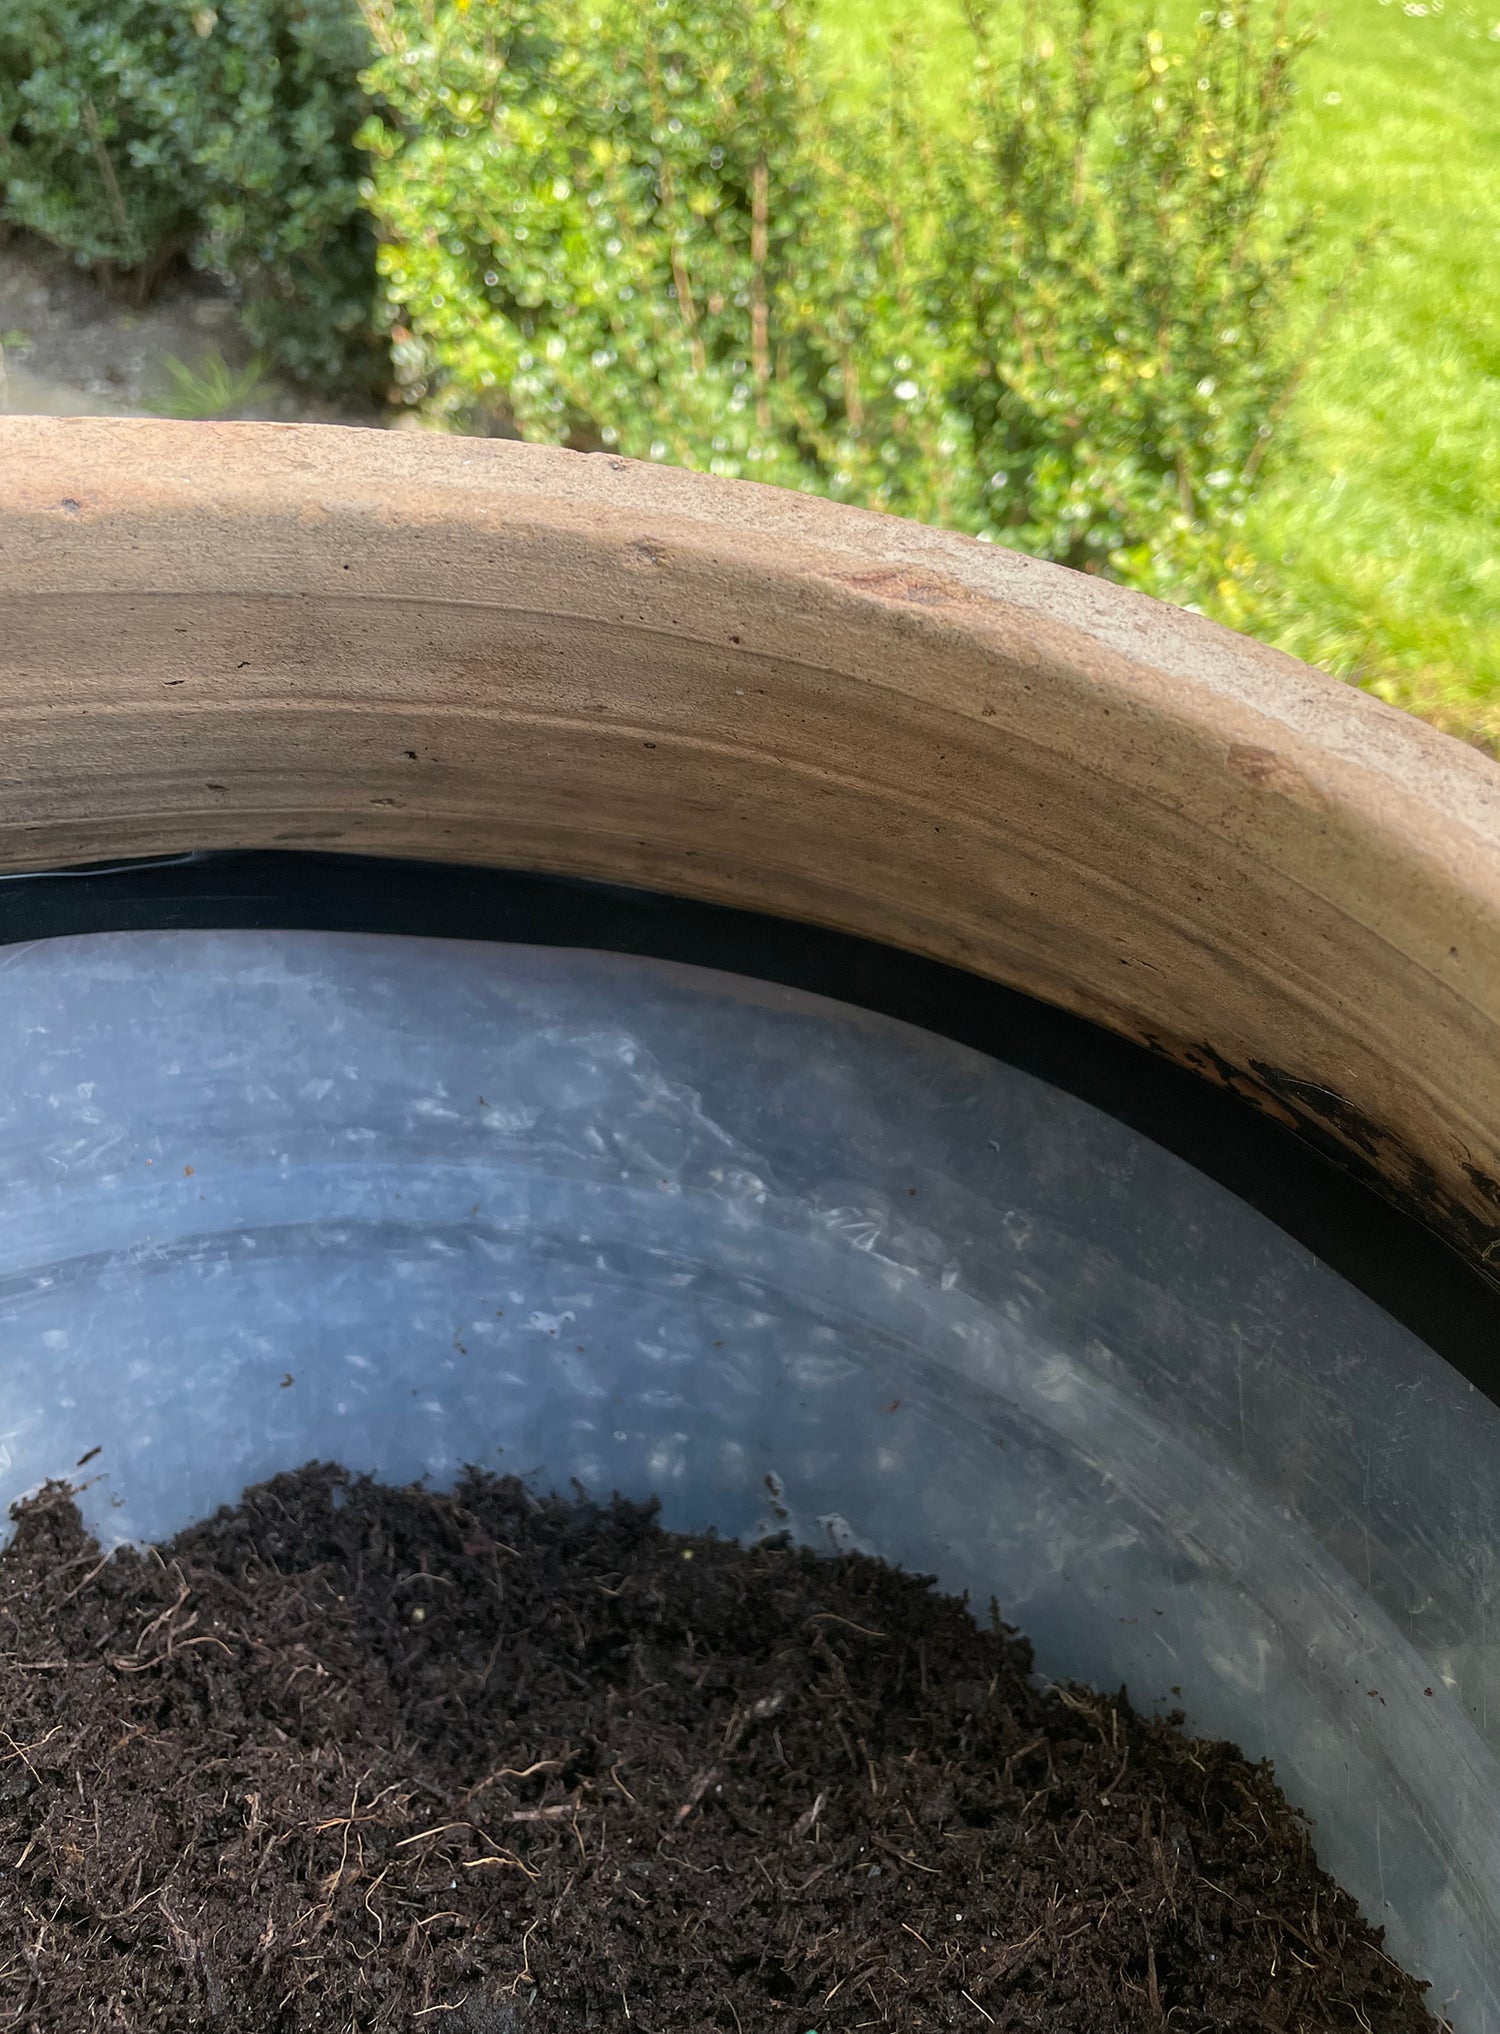 Planting guide for antique terracotta garden pot - using plastic pot liner